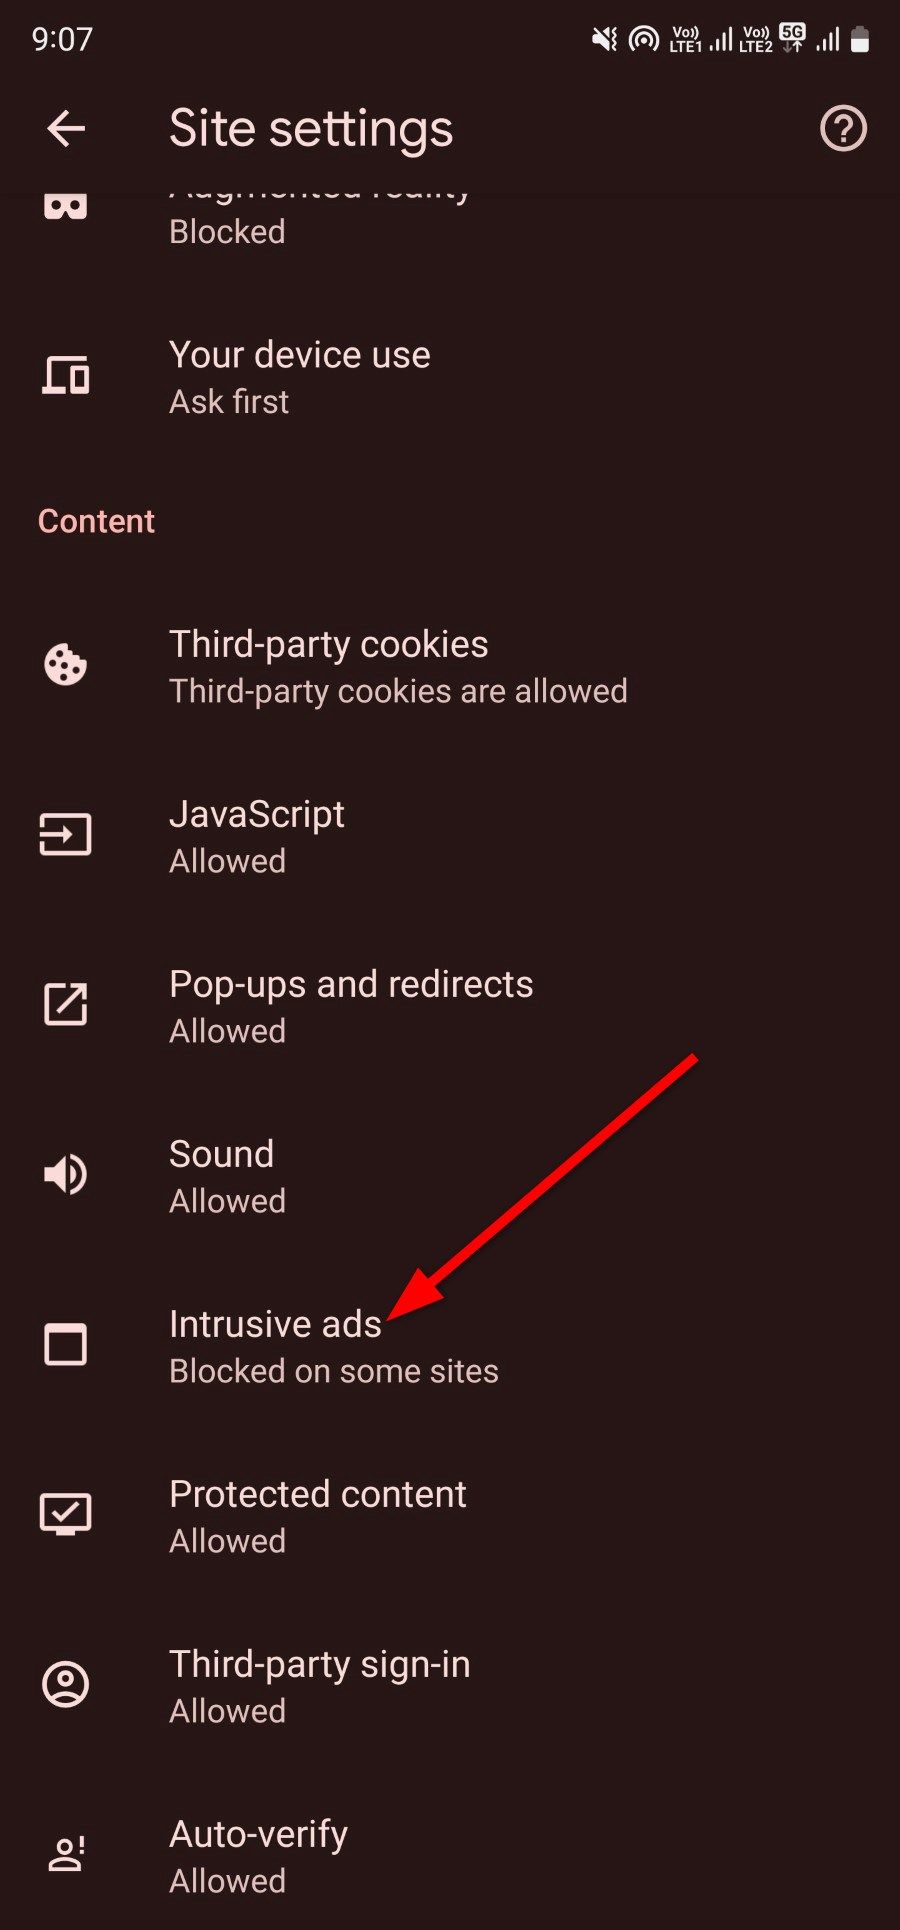 Google Chrome Intrusive Ads option on Android